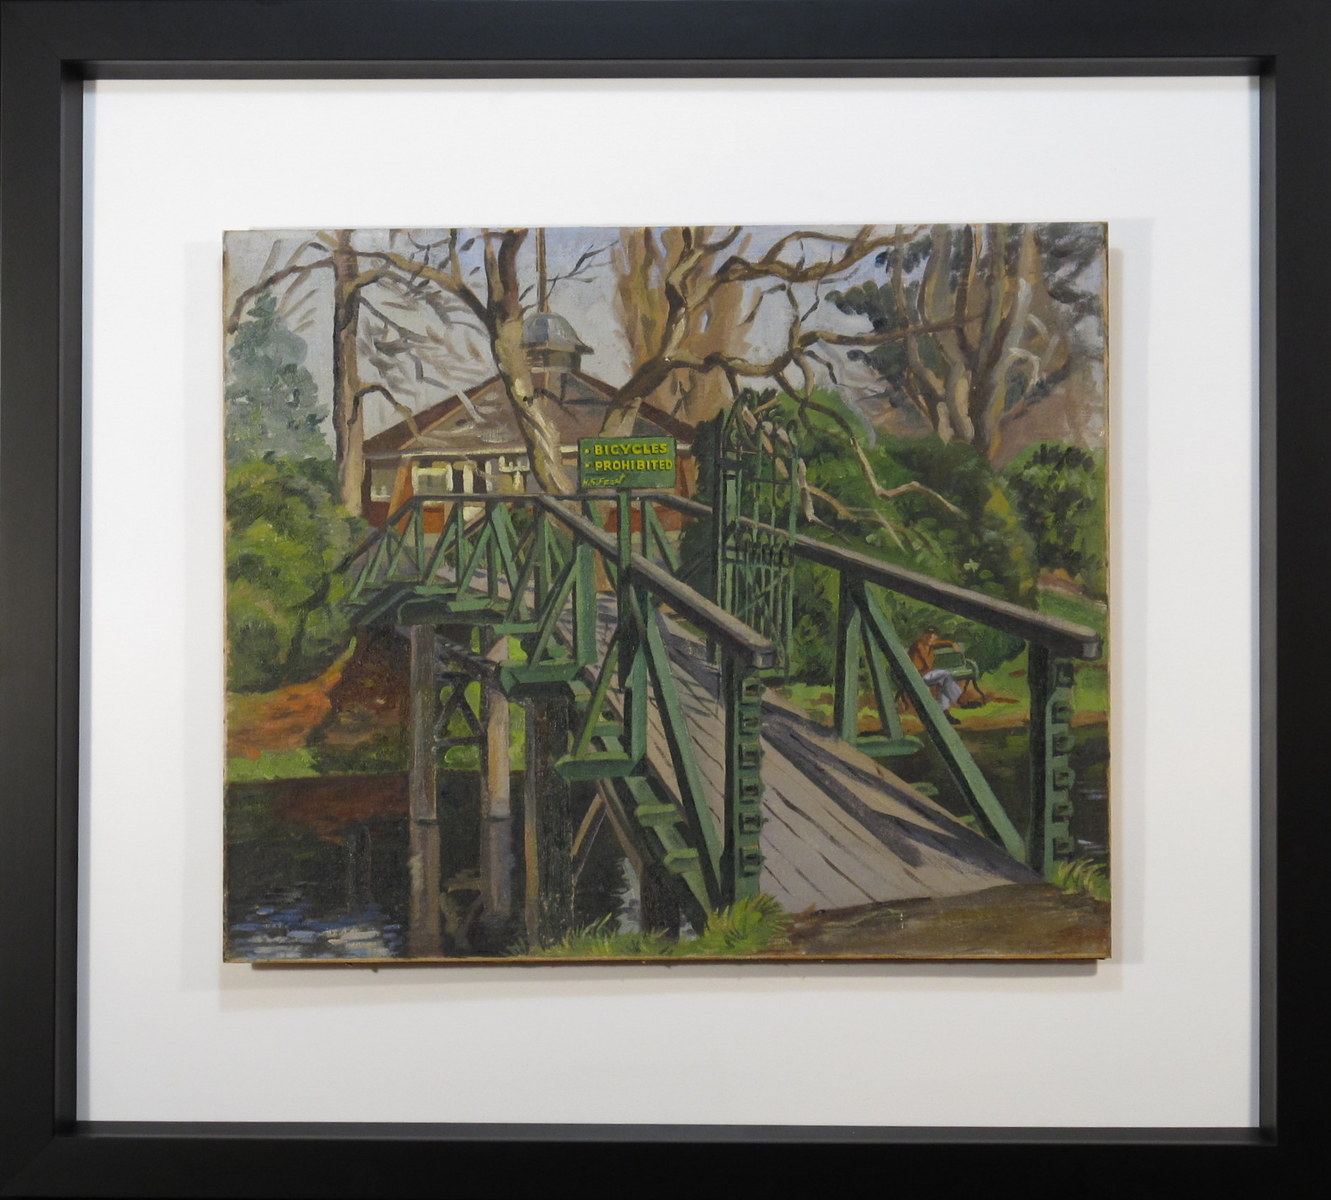 Footbridge over the Avon